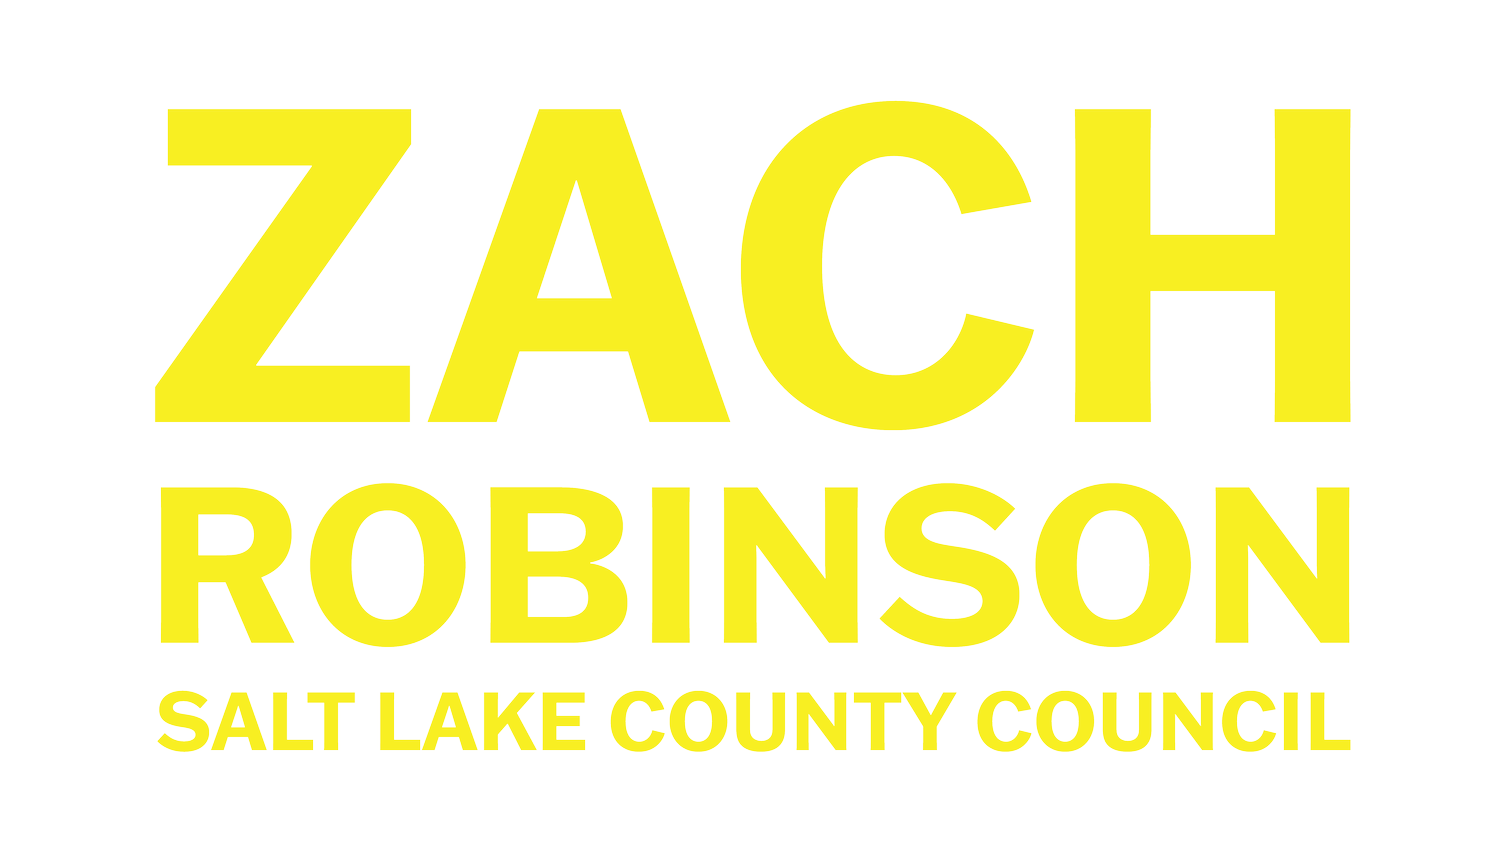 Zach Robinson for Salt Lake County Council